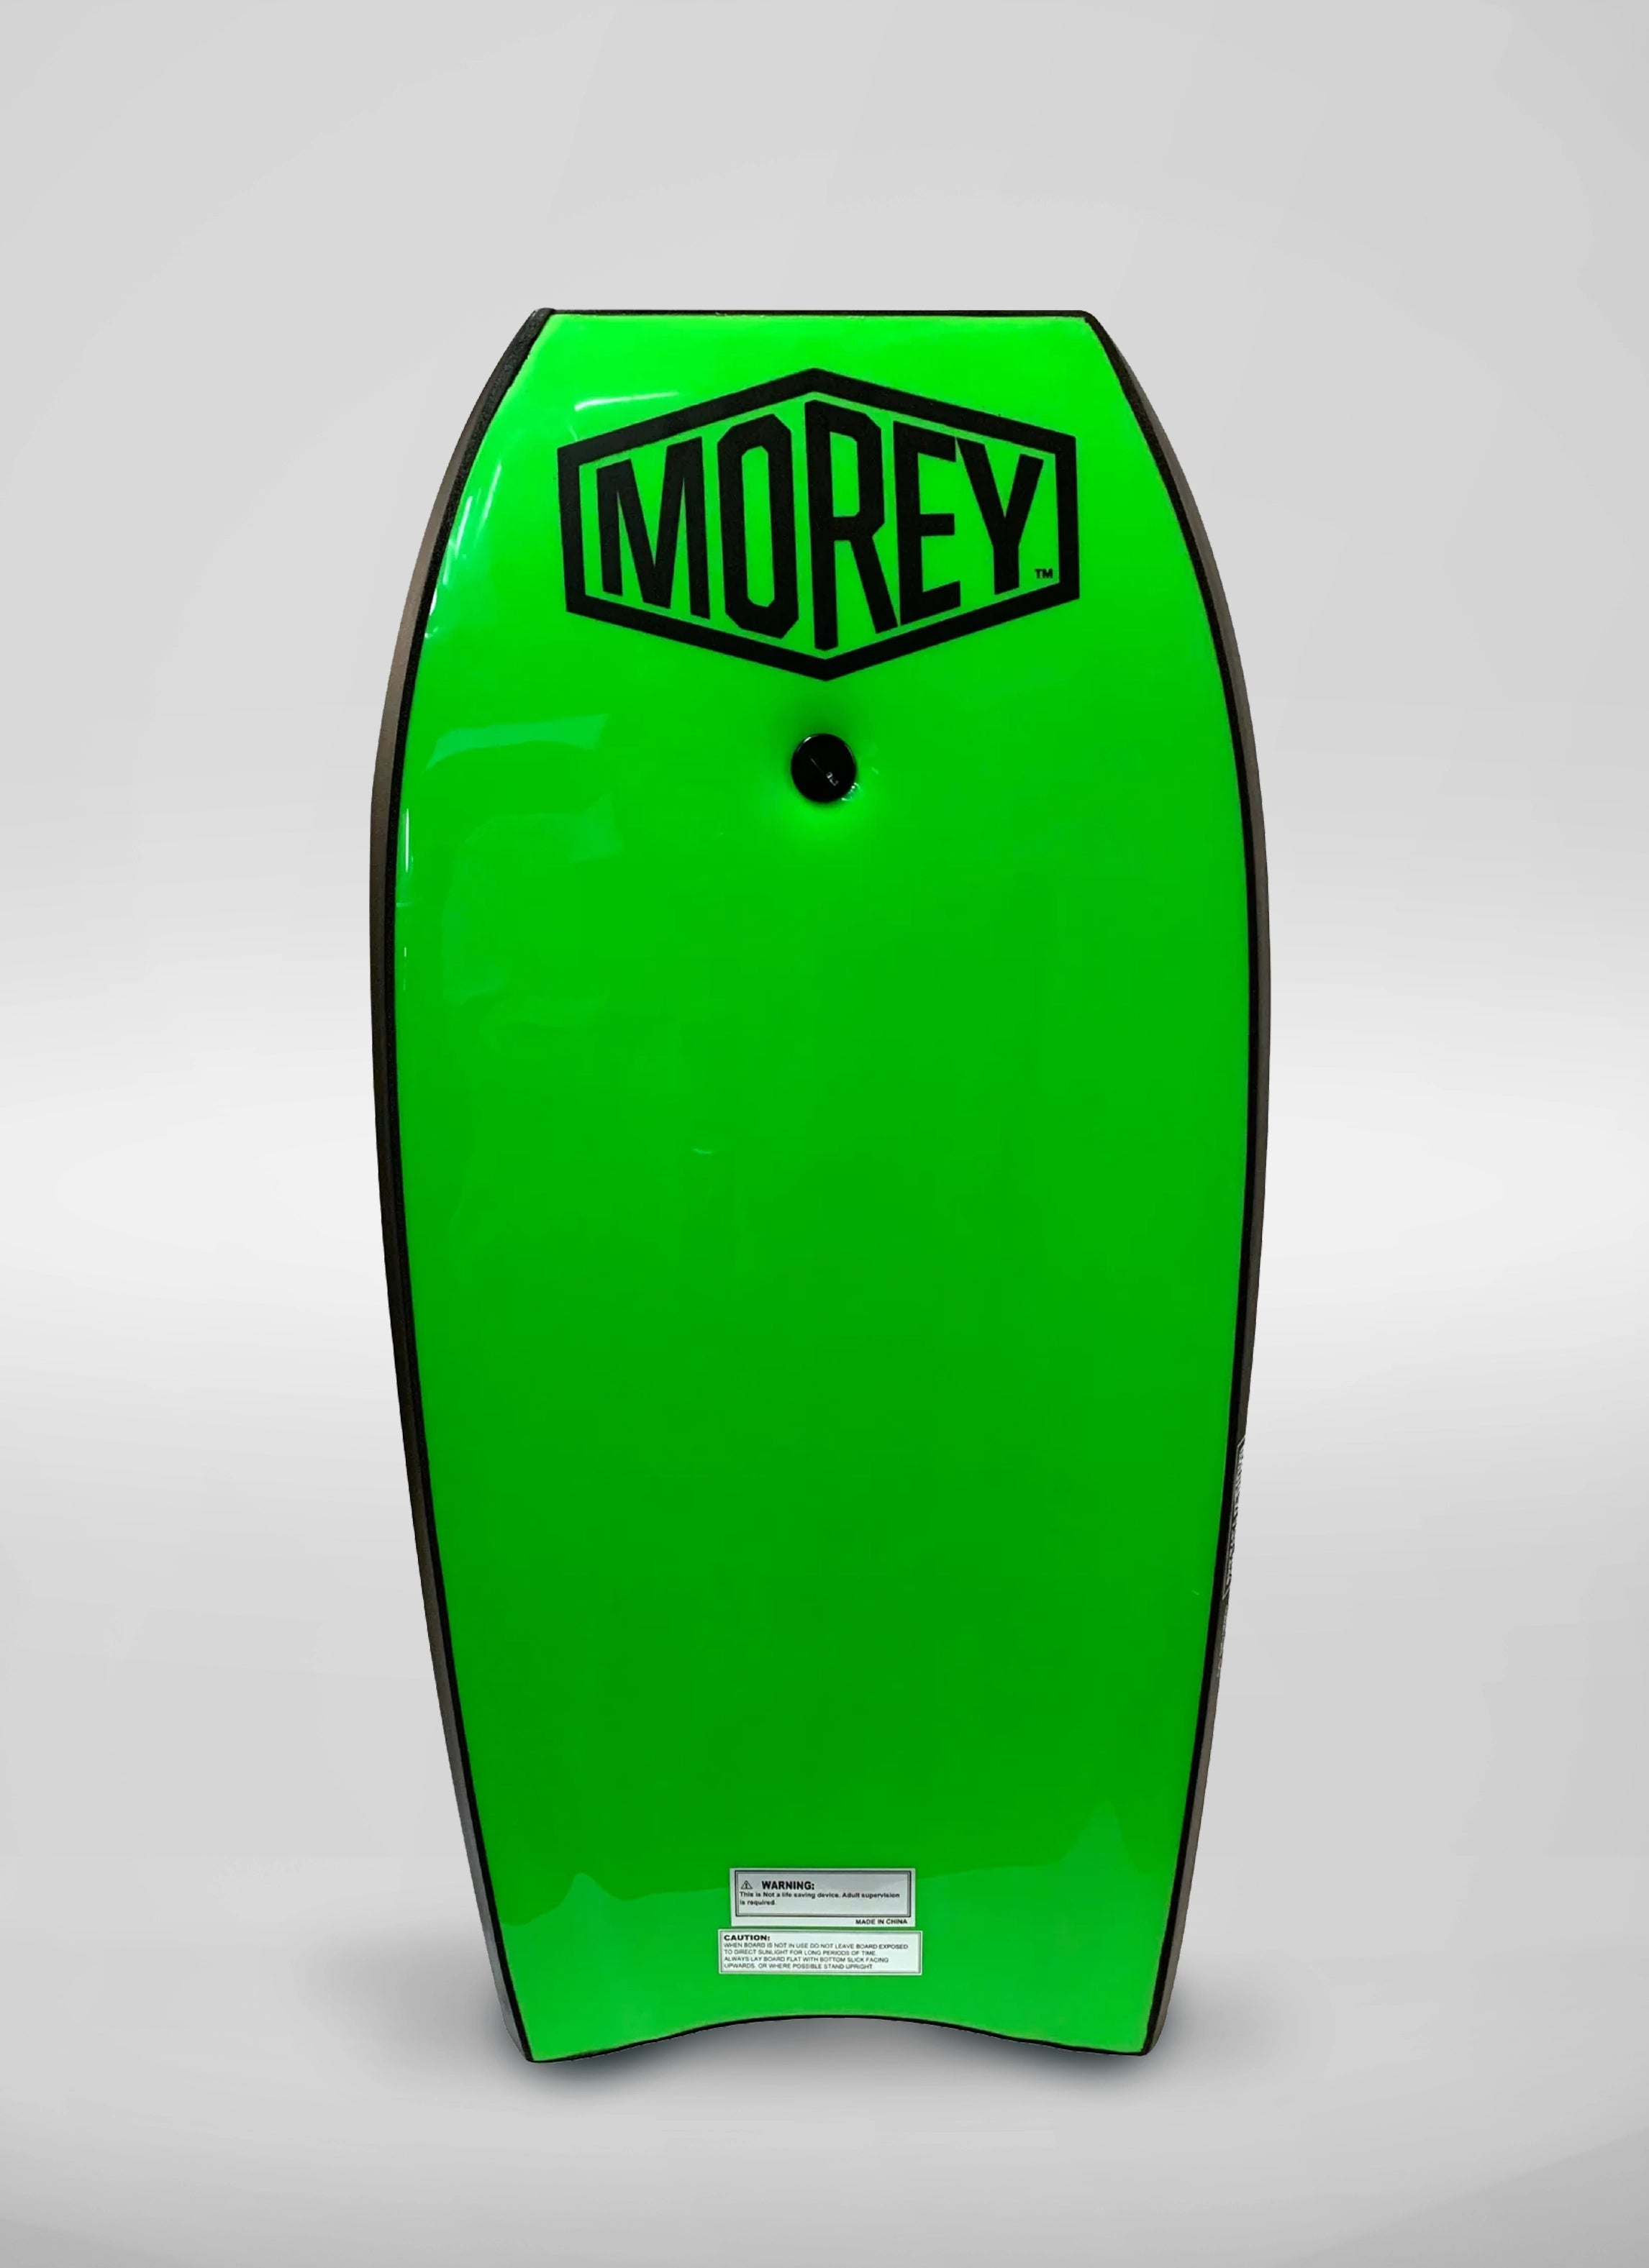  Morey Mach 7X 41.5-42.5 Bodyboard - Choose Size and